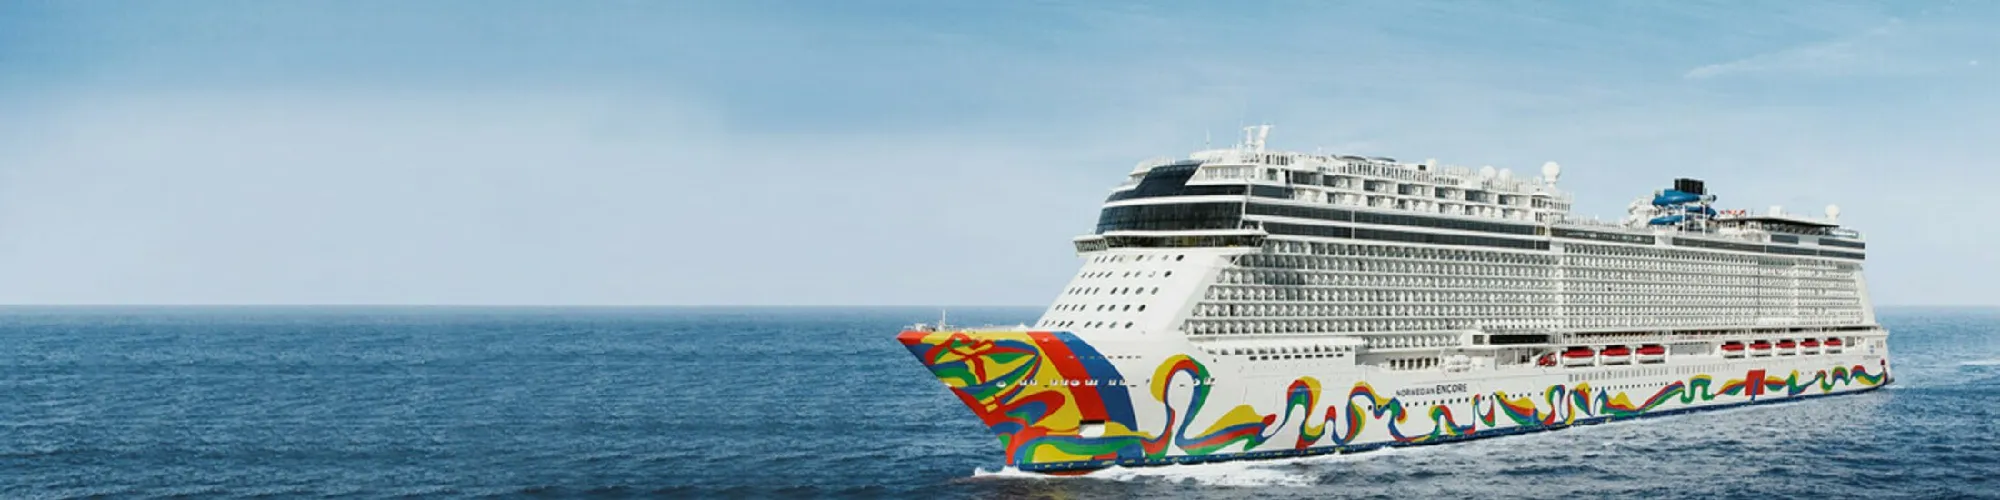 Norwegian Cruise Line background image